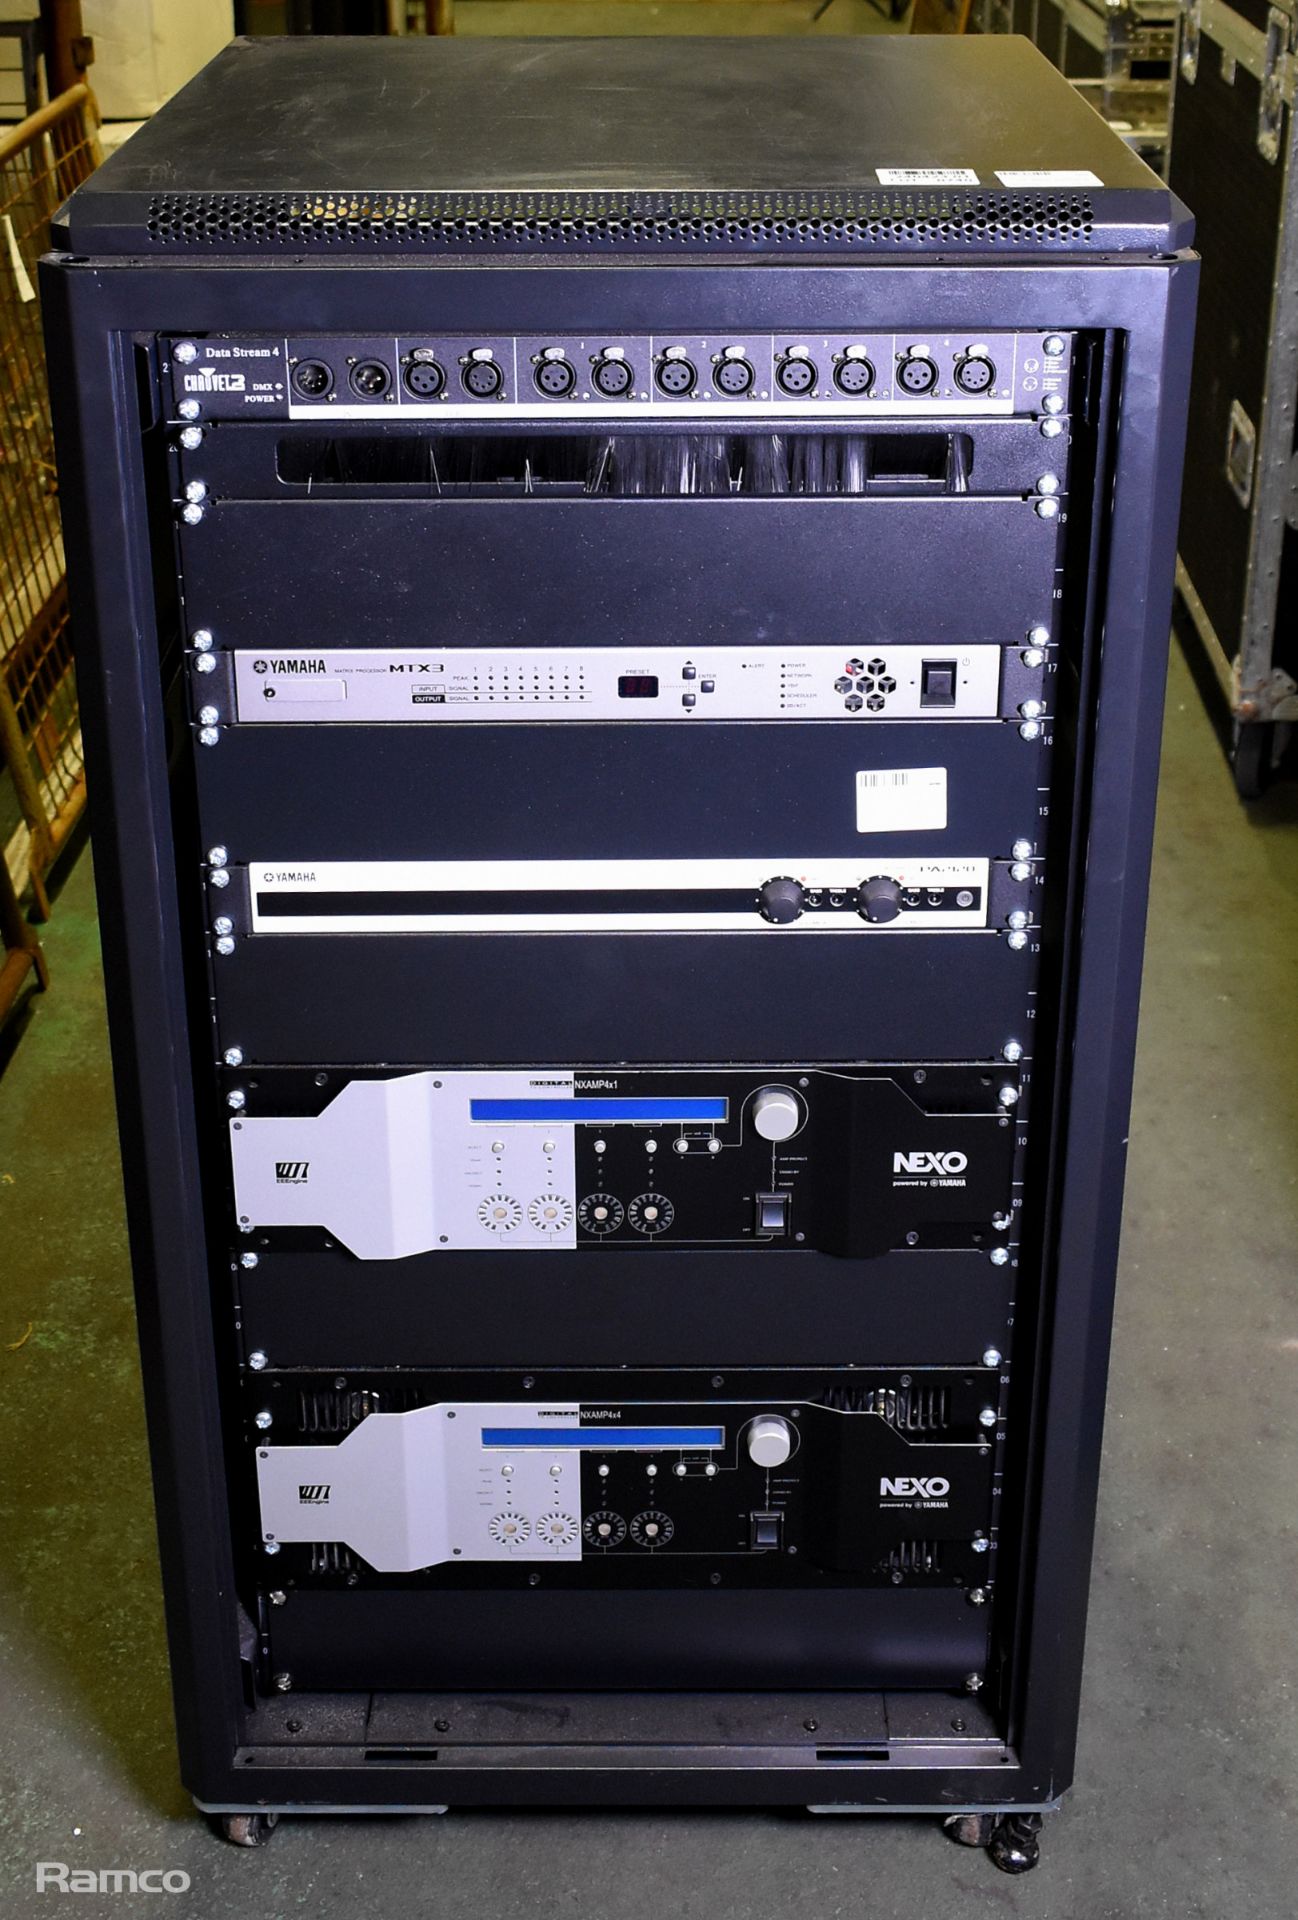 19 inch electronic instrument rack - Black - see description for details